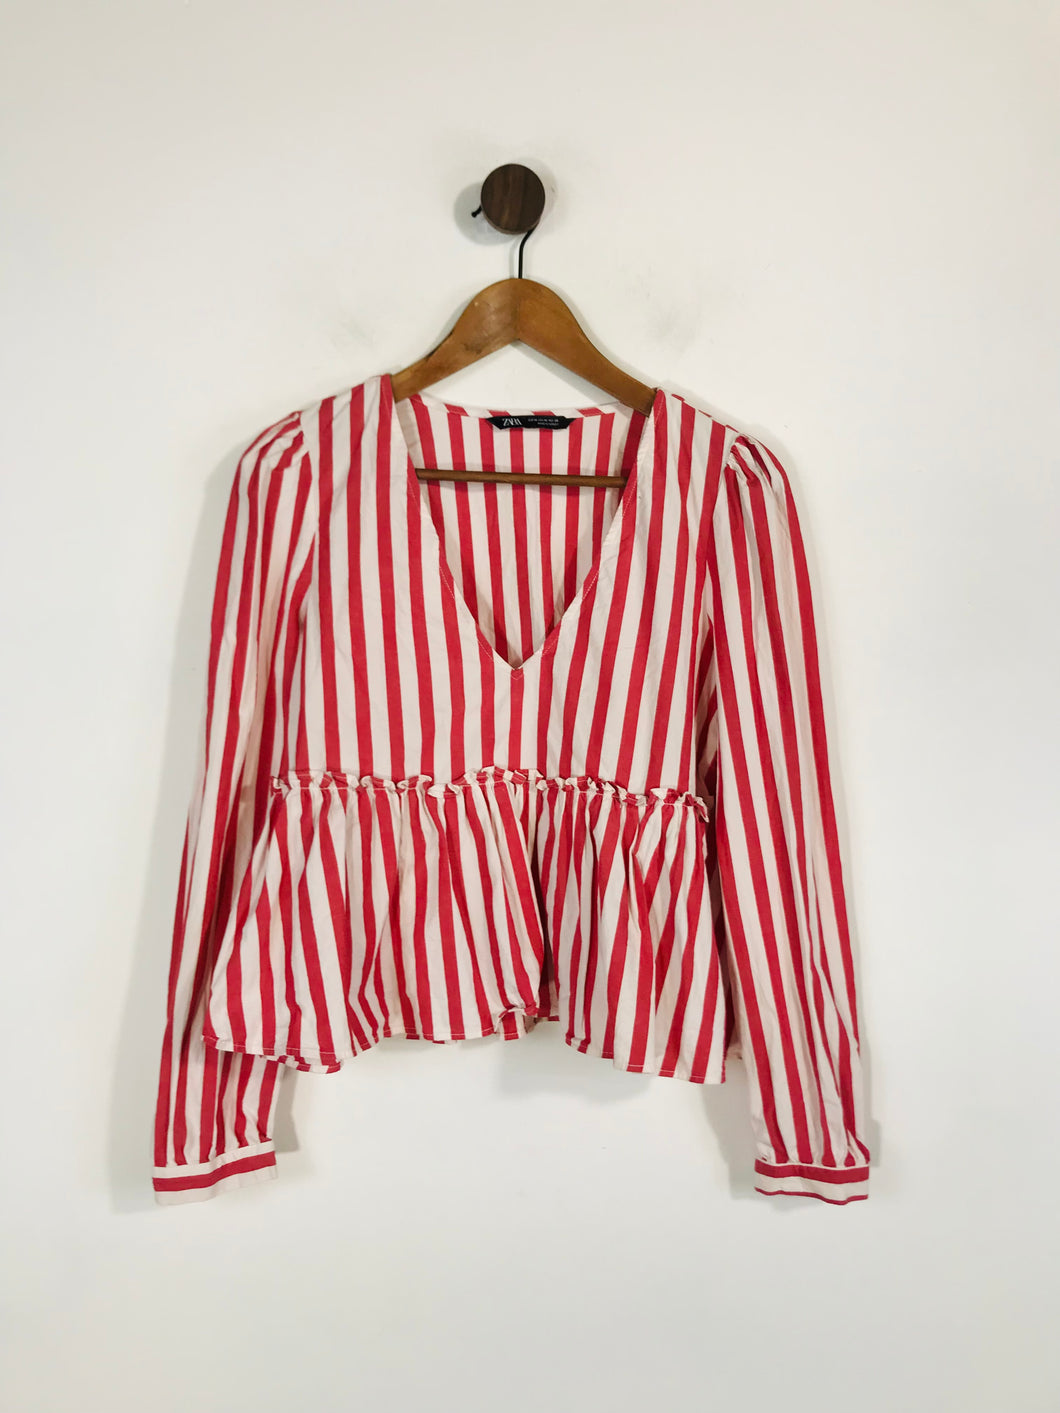 Zara Women's Striped Smock Blouse | M UK10-12 | Red